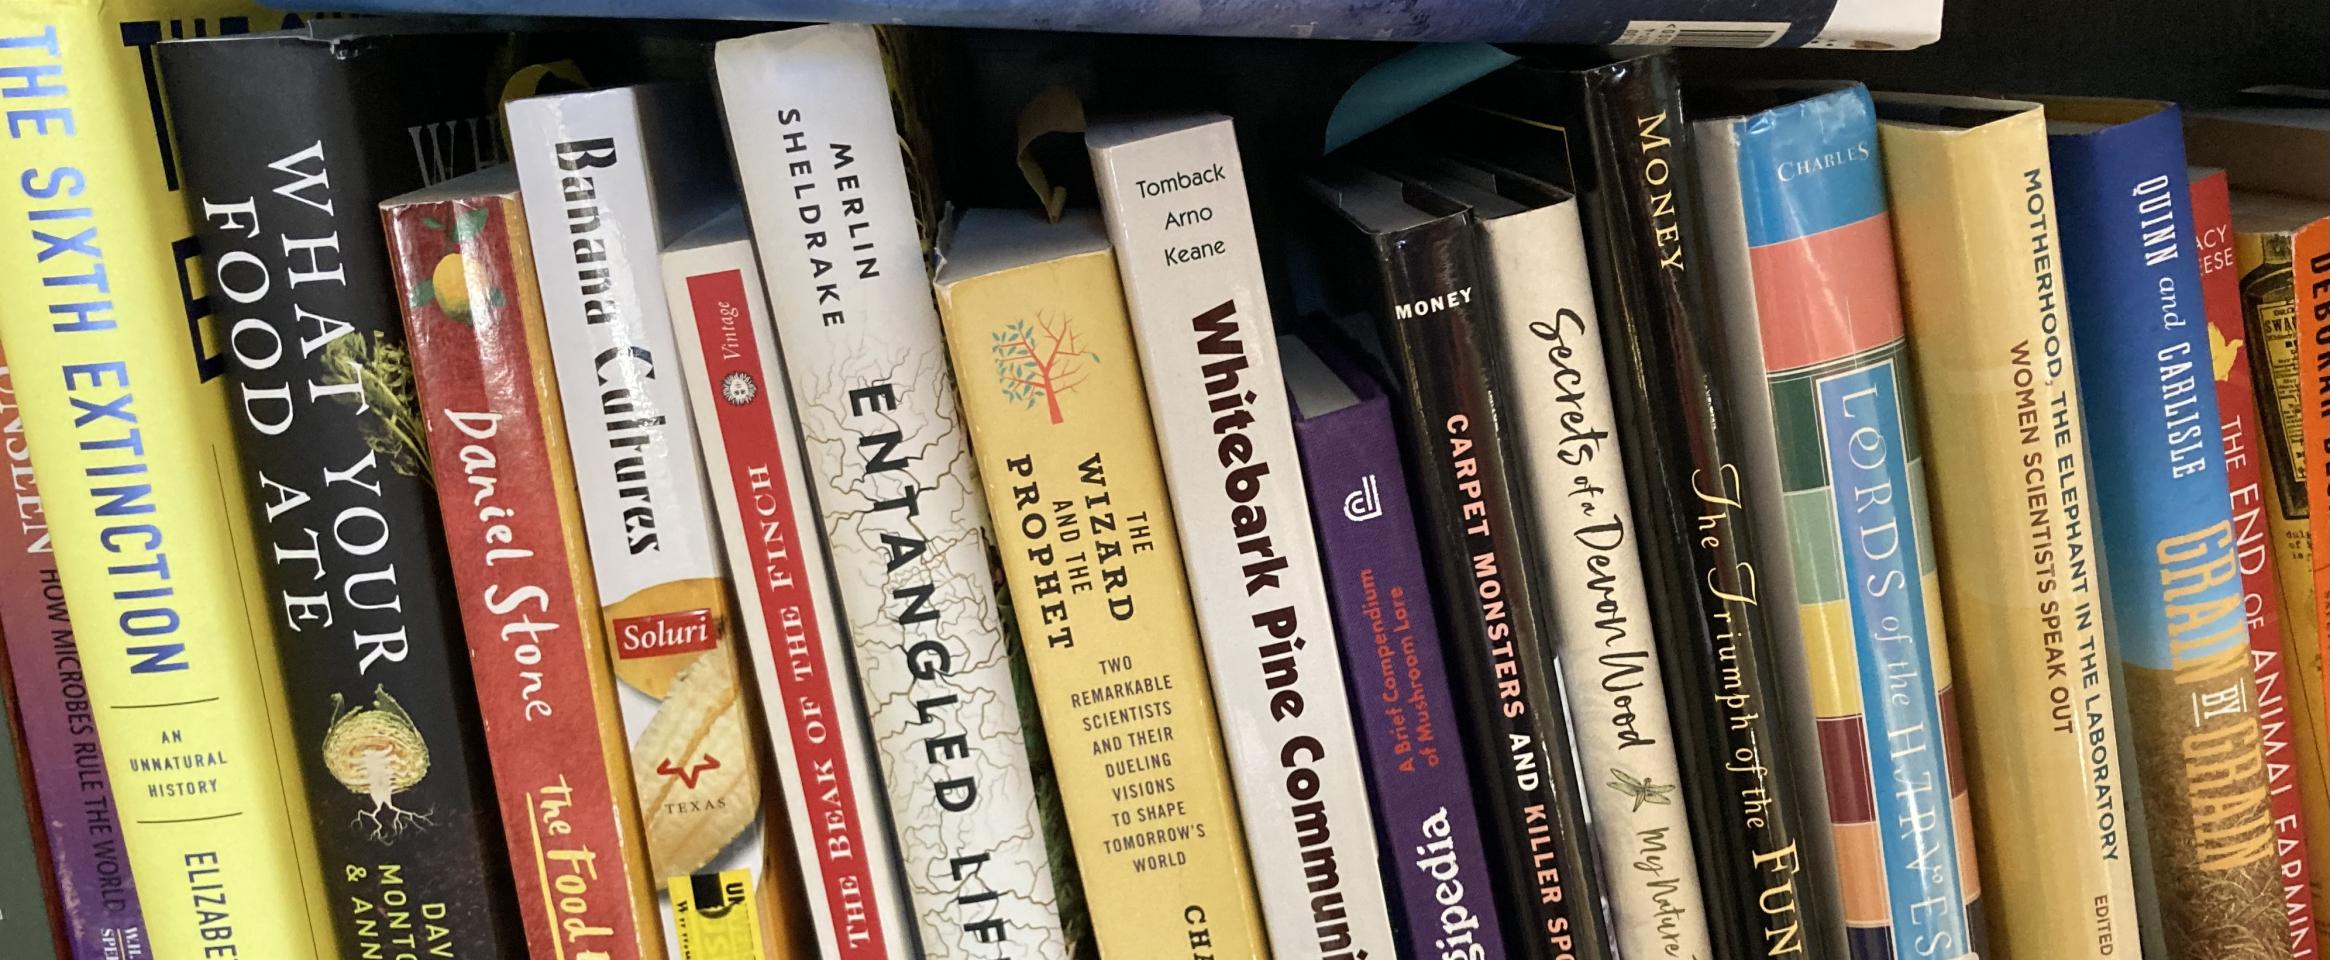  Rectangular photo of Emily Monosson’s office bookshelf showing titles on fungi and natural history. Photo credit Emily Monosson.